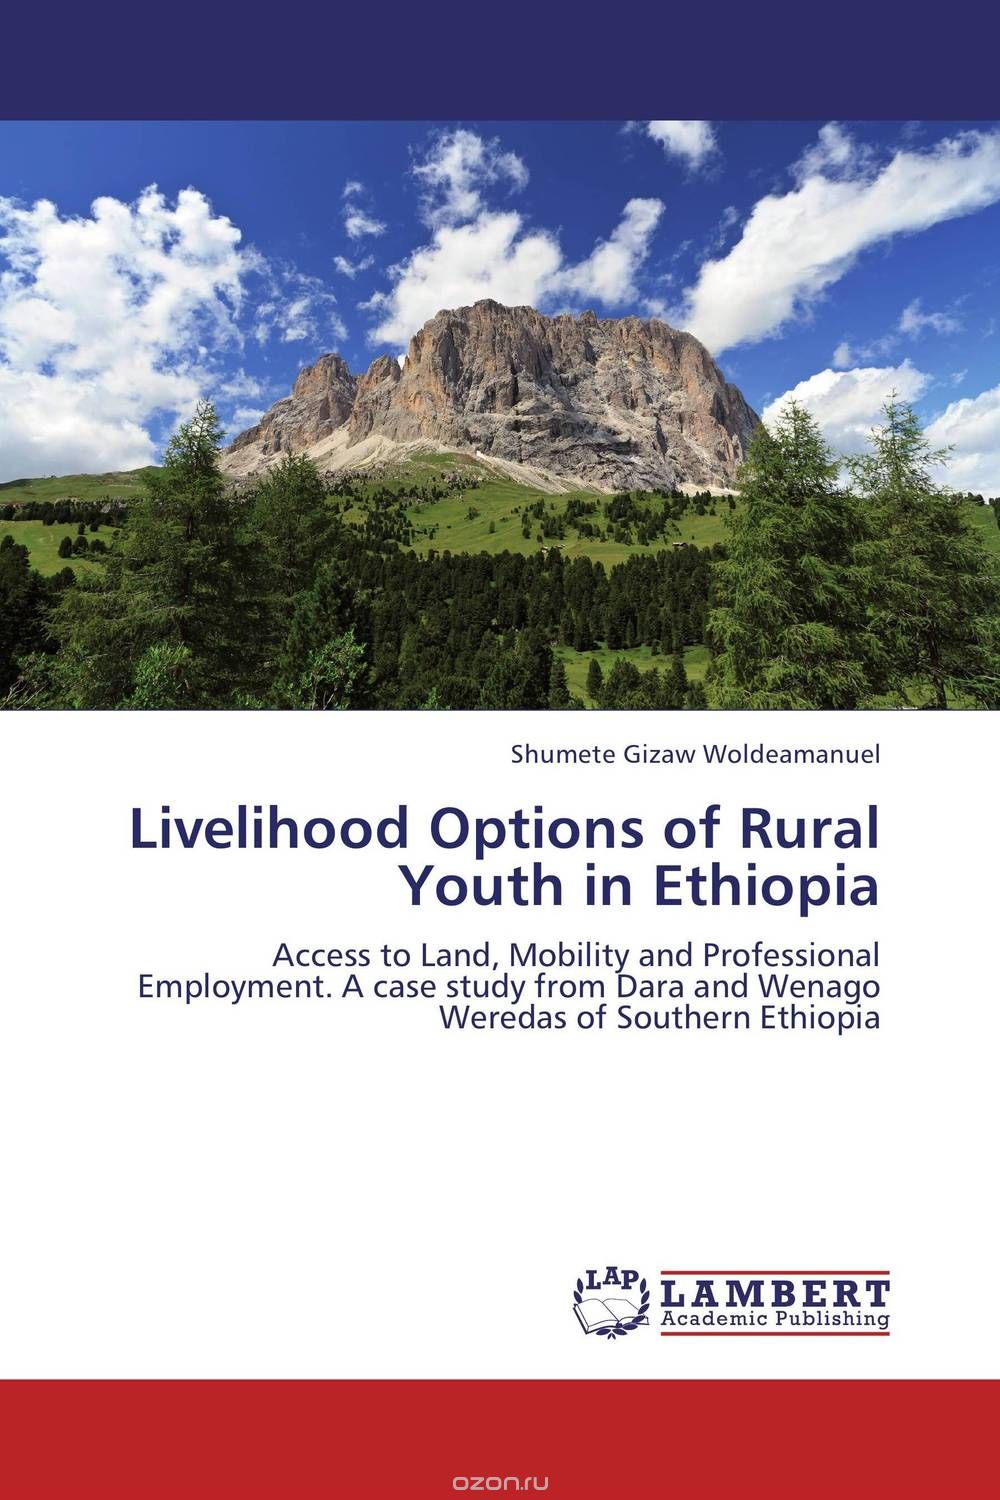 Скачать книгу "Livelihood Options of Rural Youth in Ethiopia"